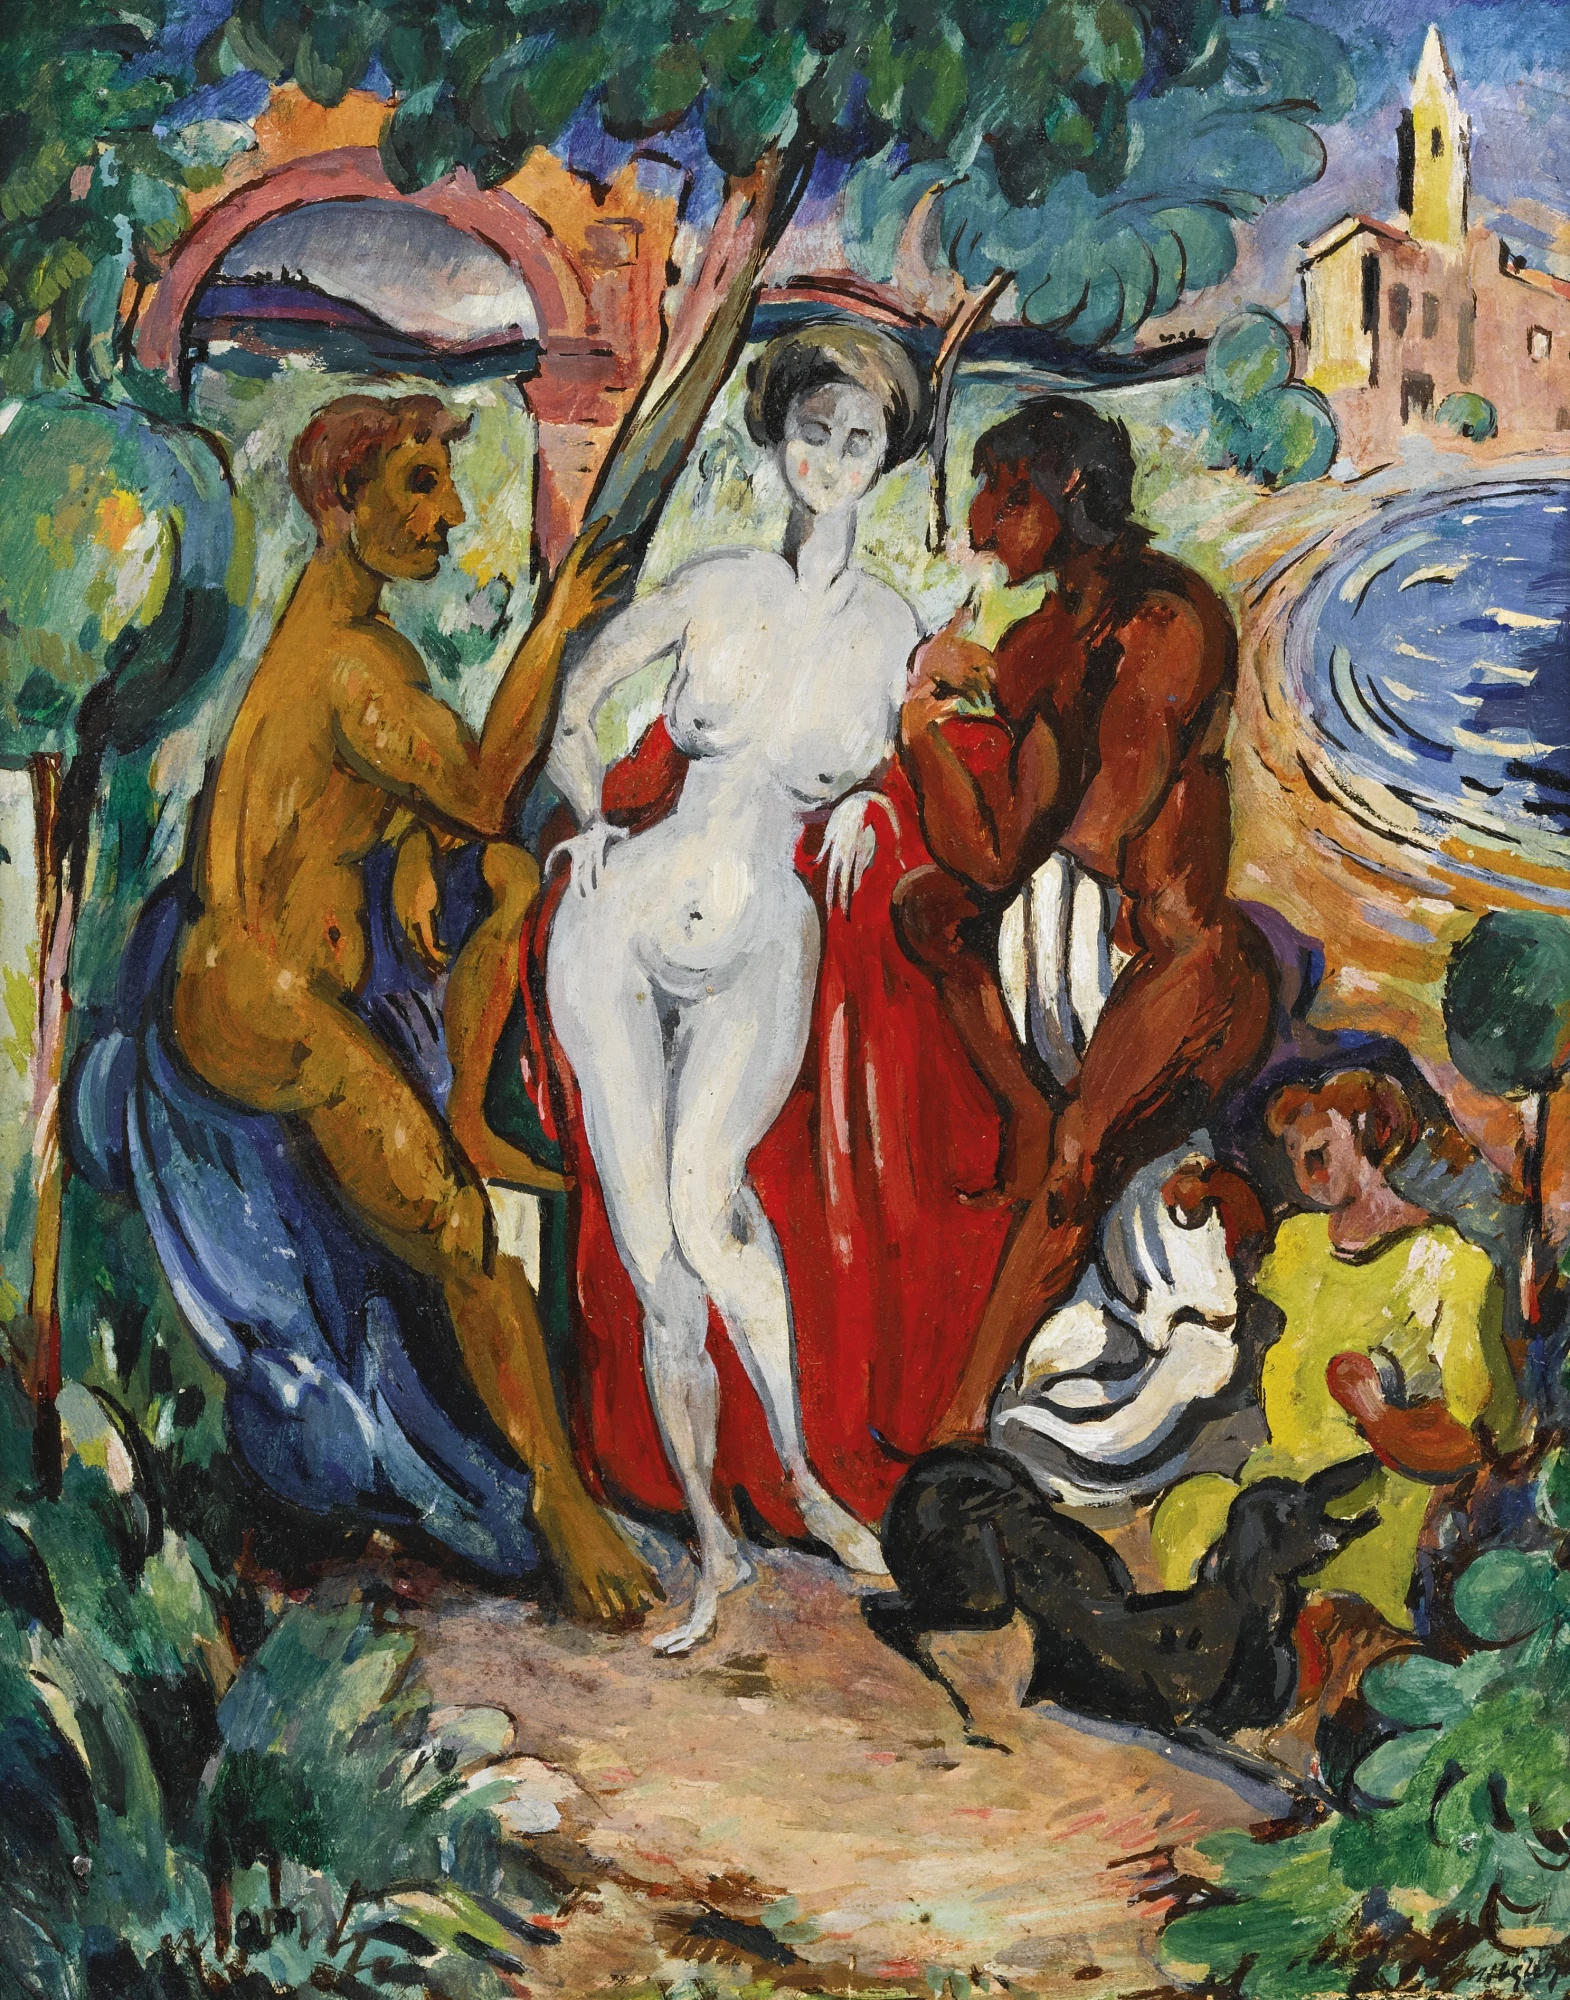 Woman, Two Men and Children, Albert Gleizes